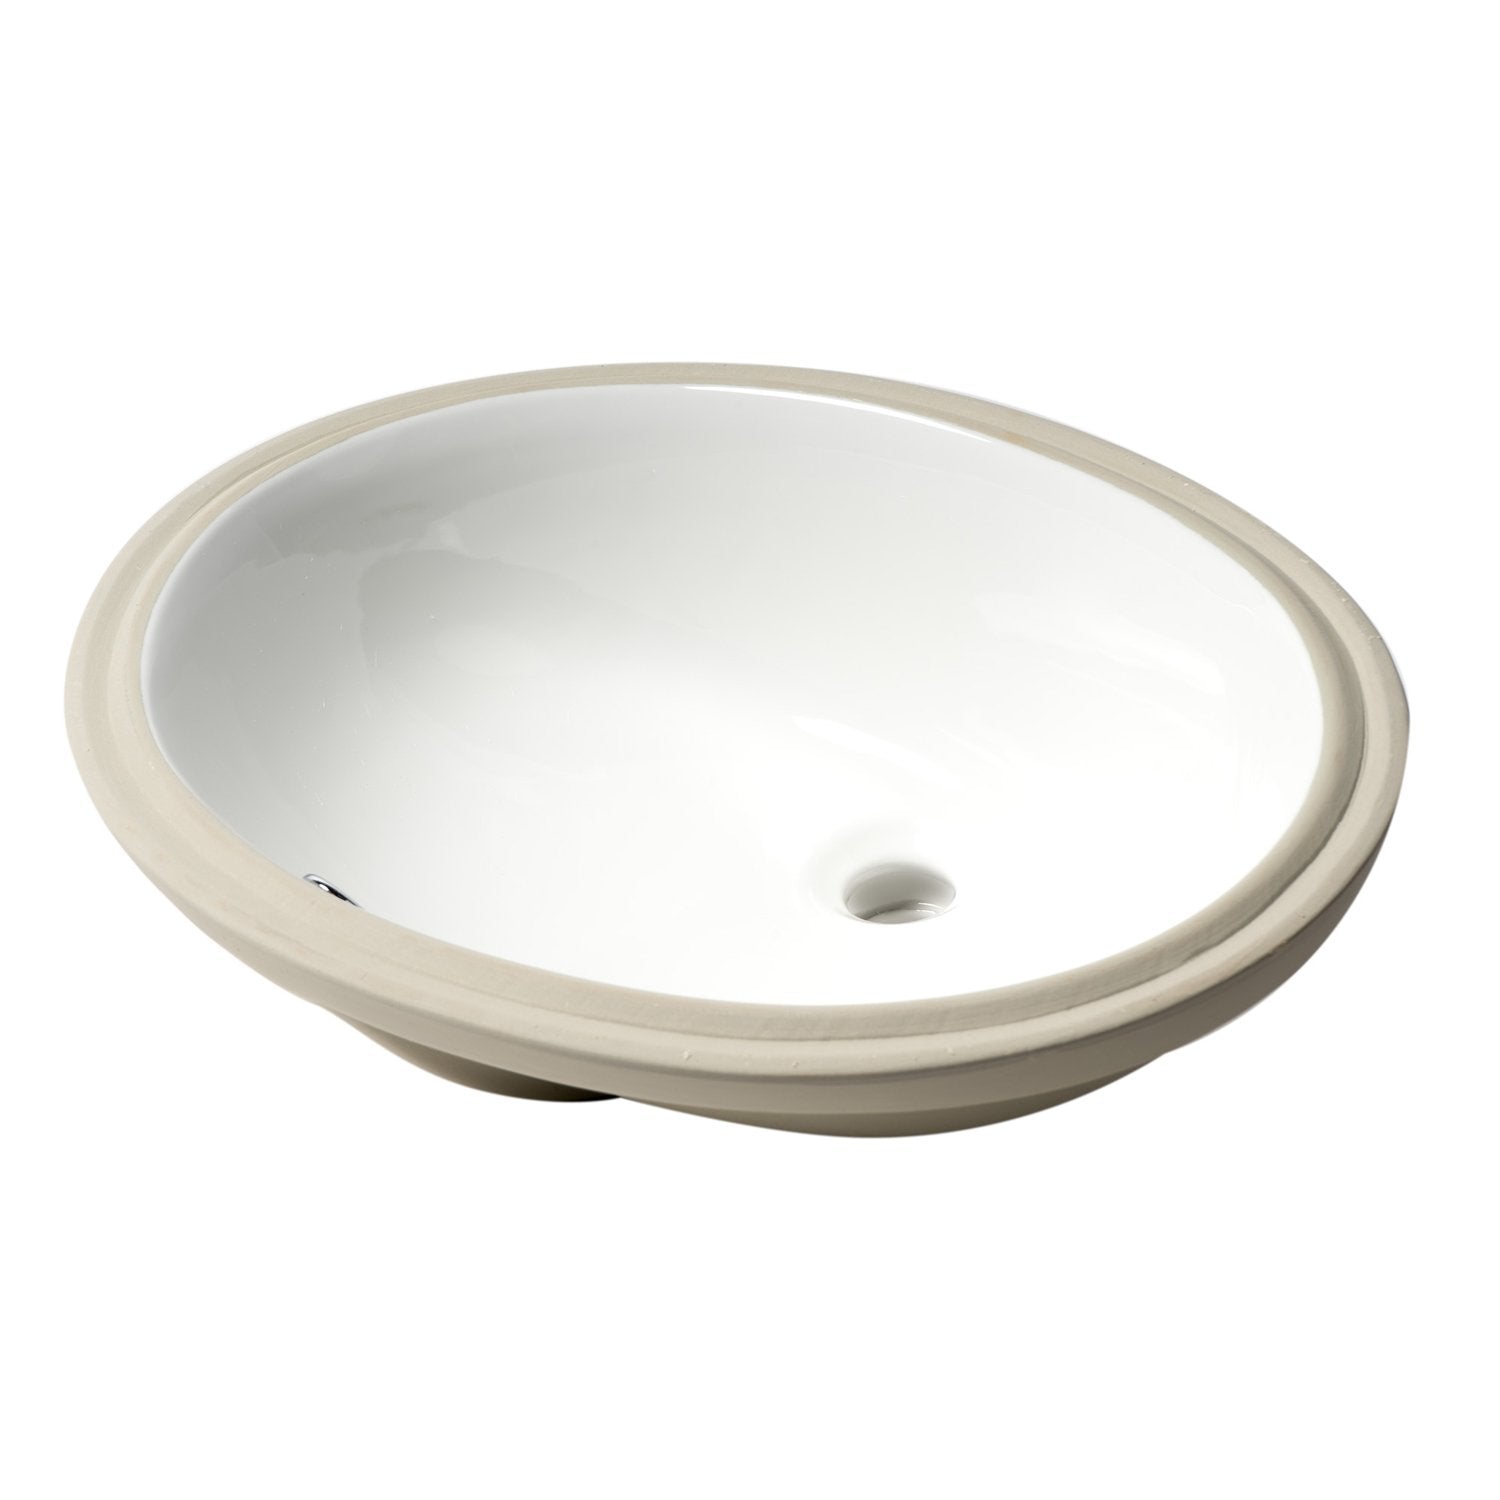 ALFI ABC602 White 23" Oval Undermount Ceramic Sink